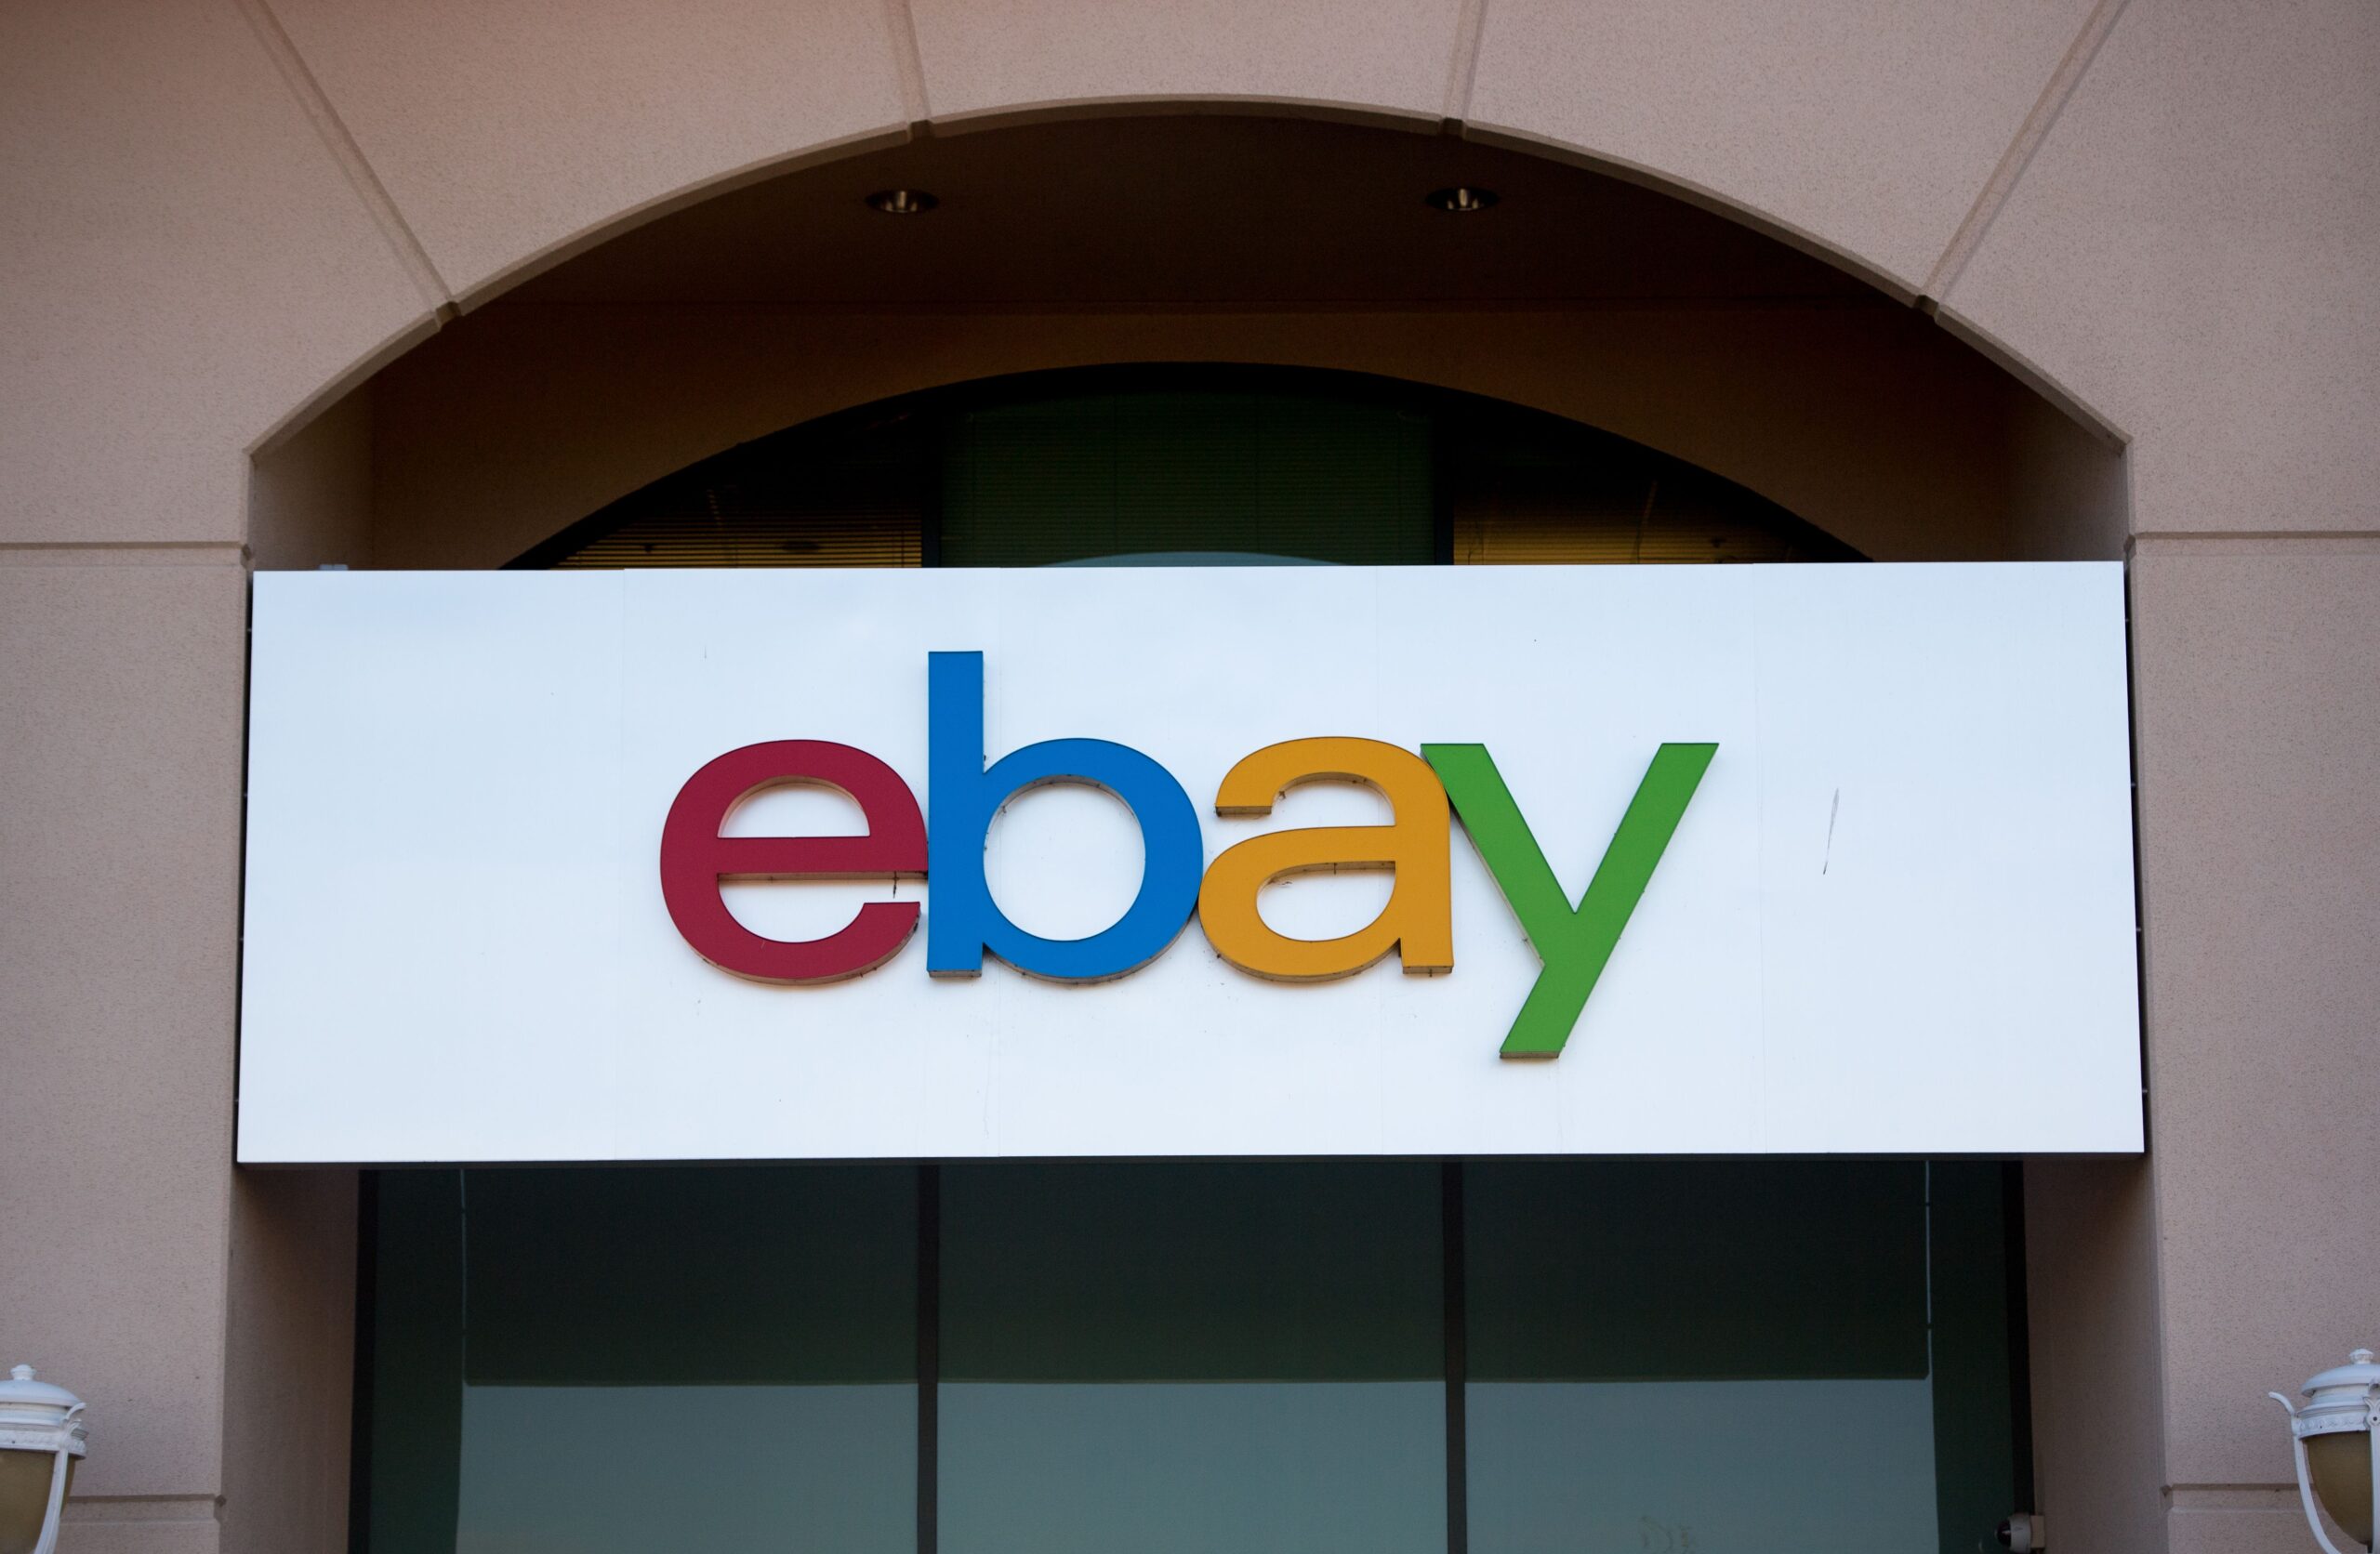 ebay-to-pay-$59-million-settlement-for-sales-of-“illegal-drug-equipment”